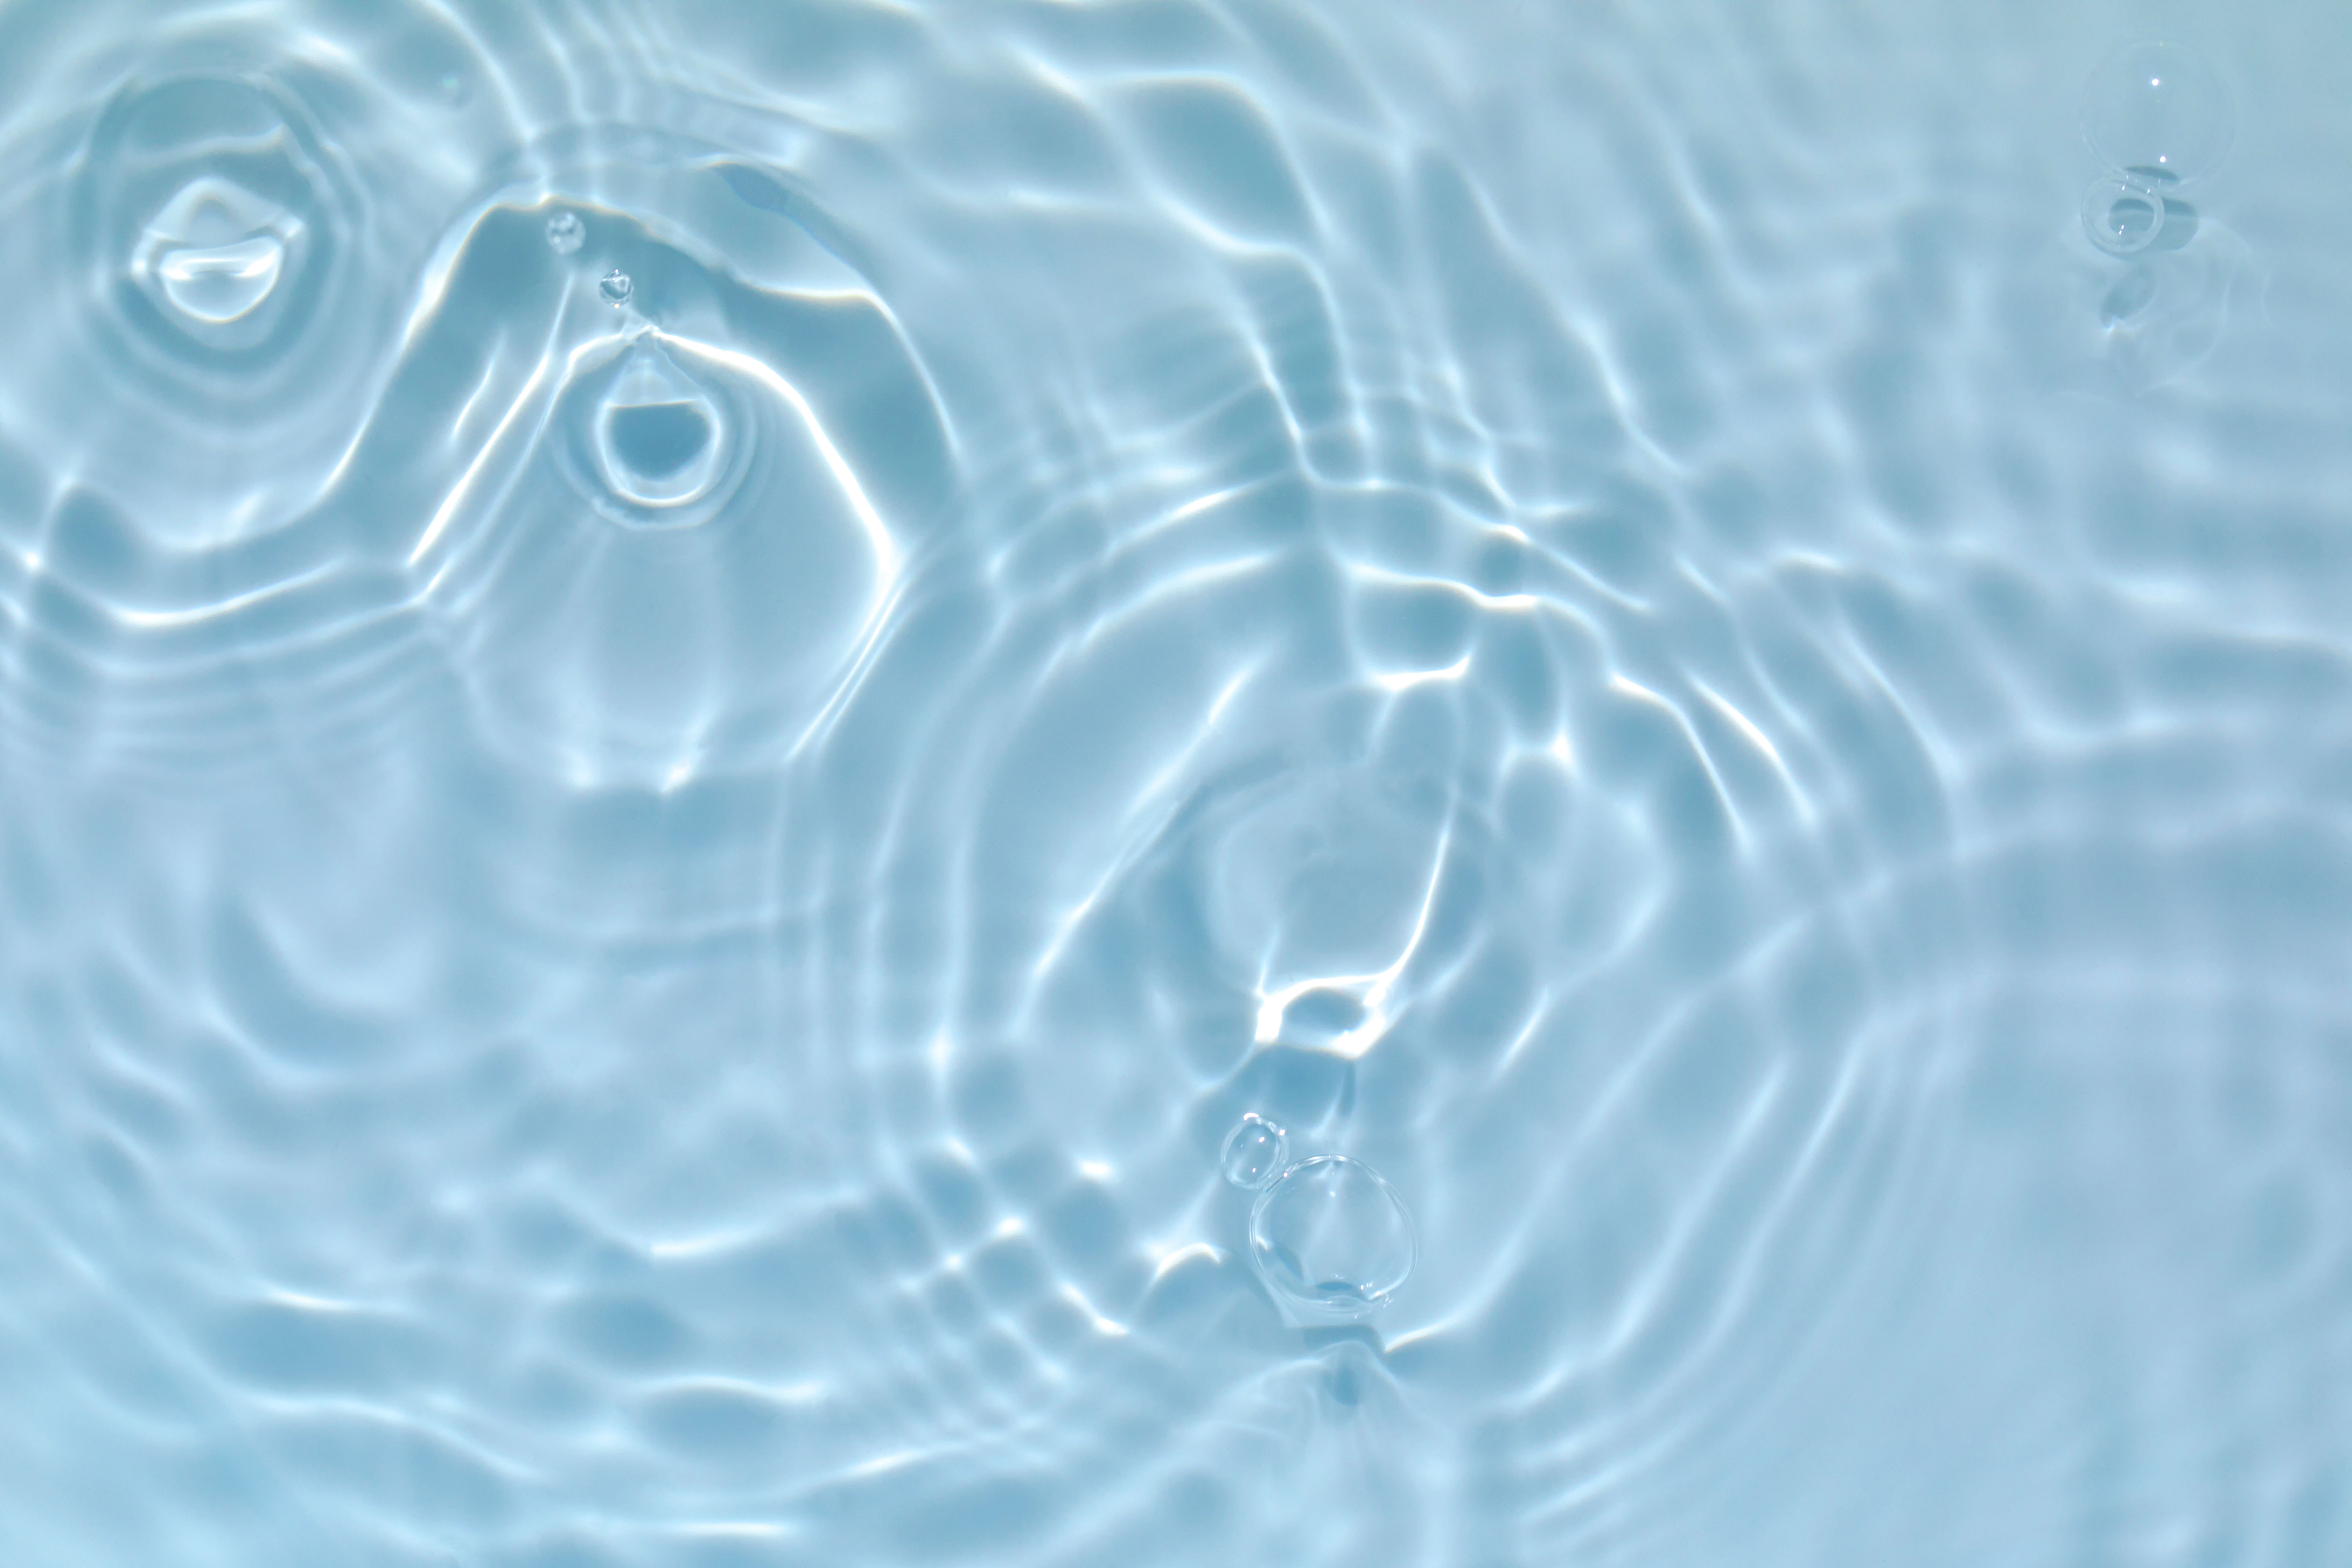 Fórmula del agua micelar 7 en 1 PURIFIED SKIN NEUTROGENA® 